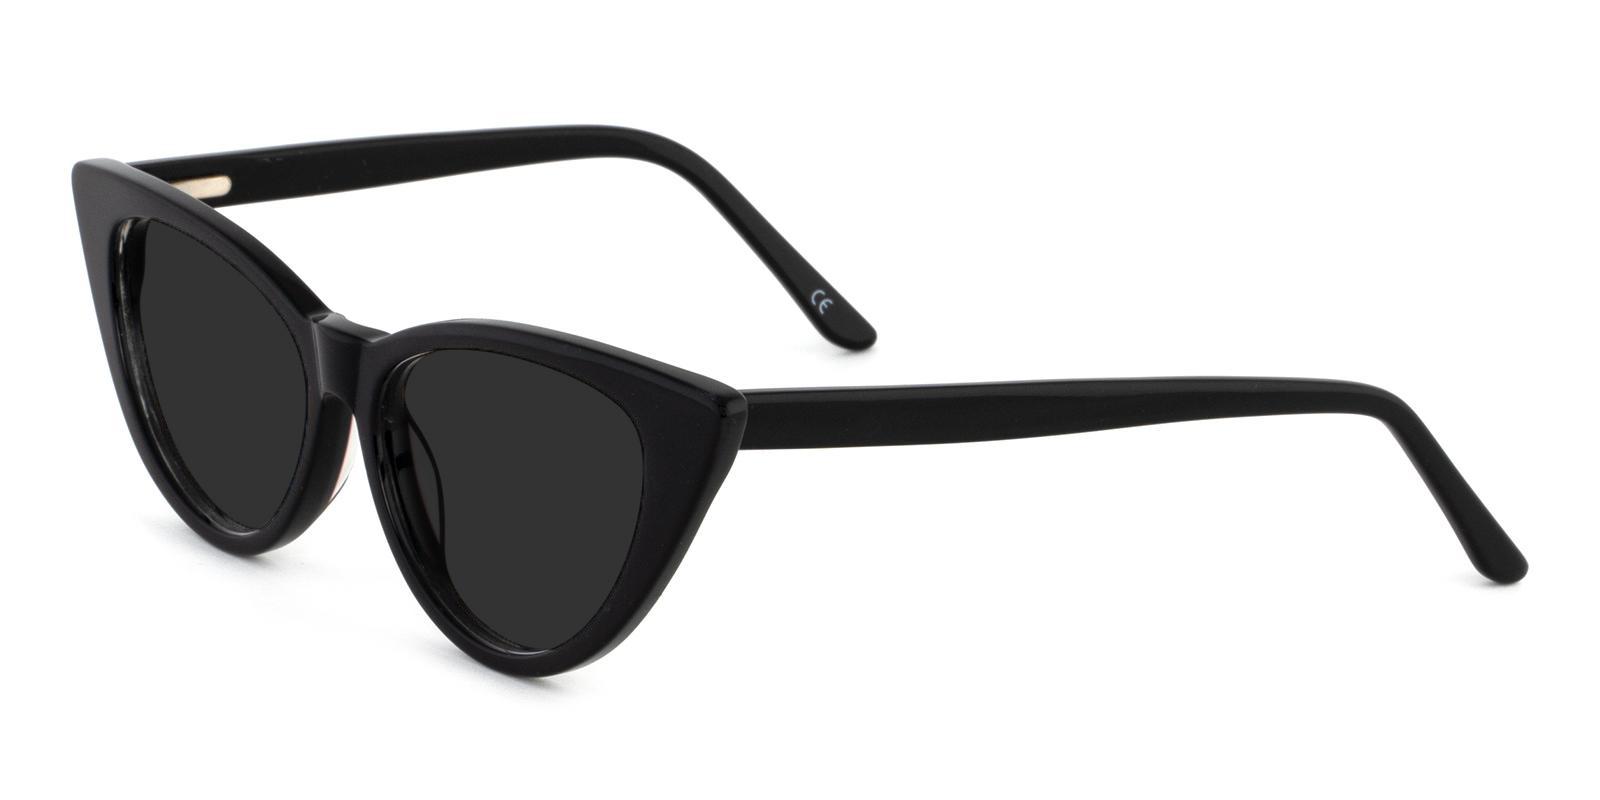 Escape Black Acetate SpringHinges , Sunglasses , UniversalBridgeFit Frames from ABBE Glasses